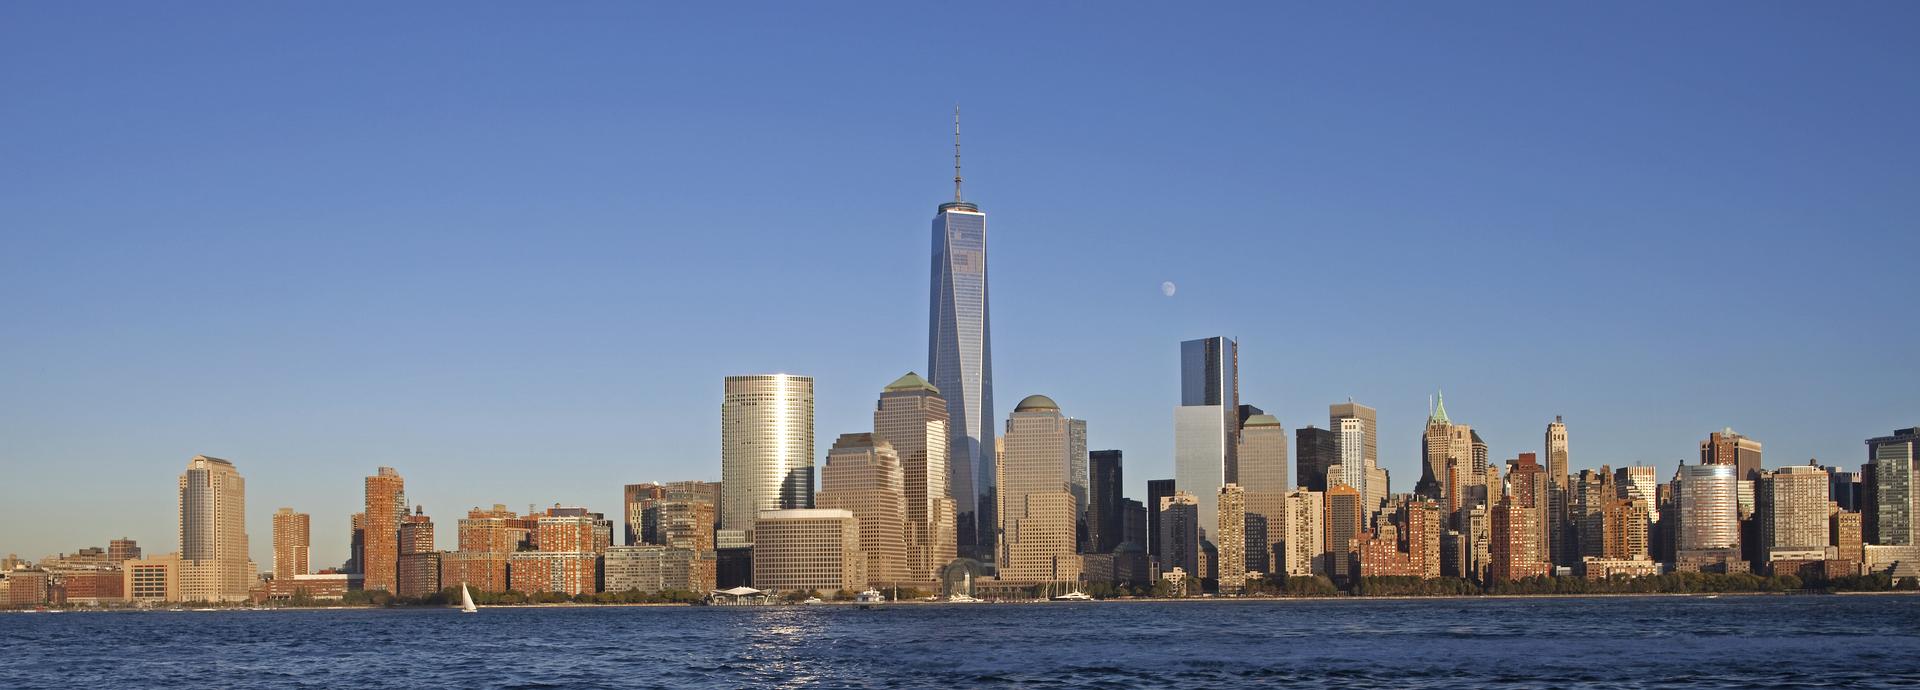 World Trade Center Tower 1